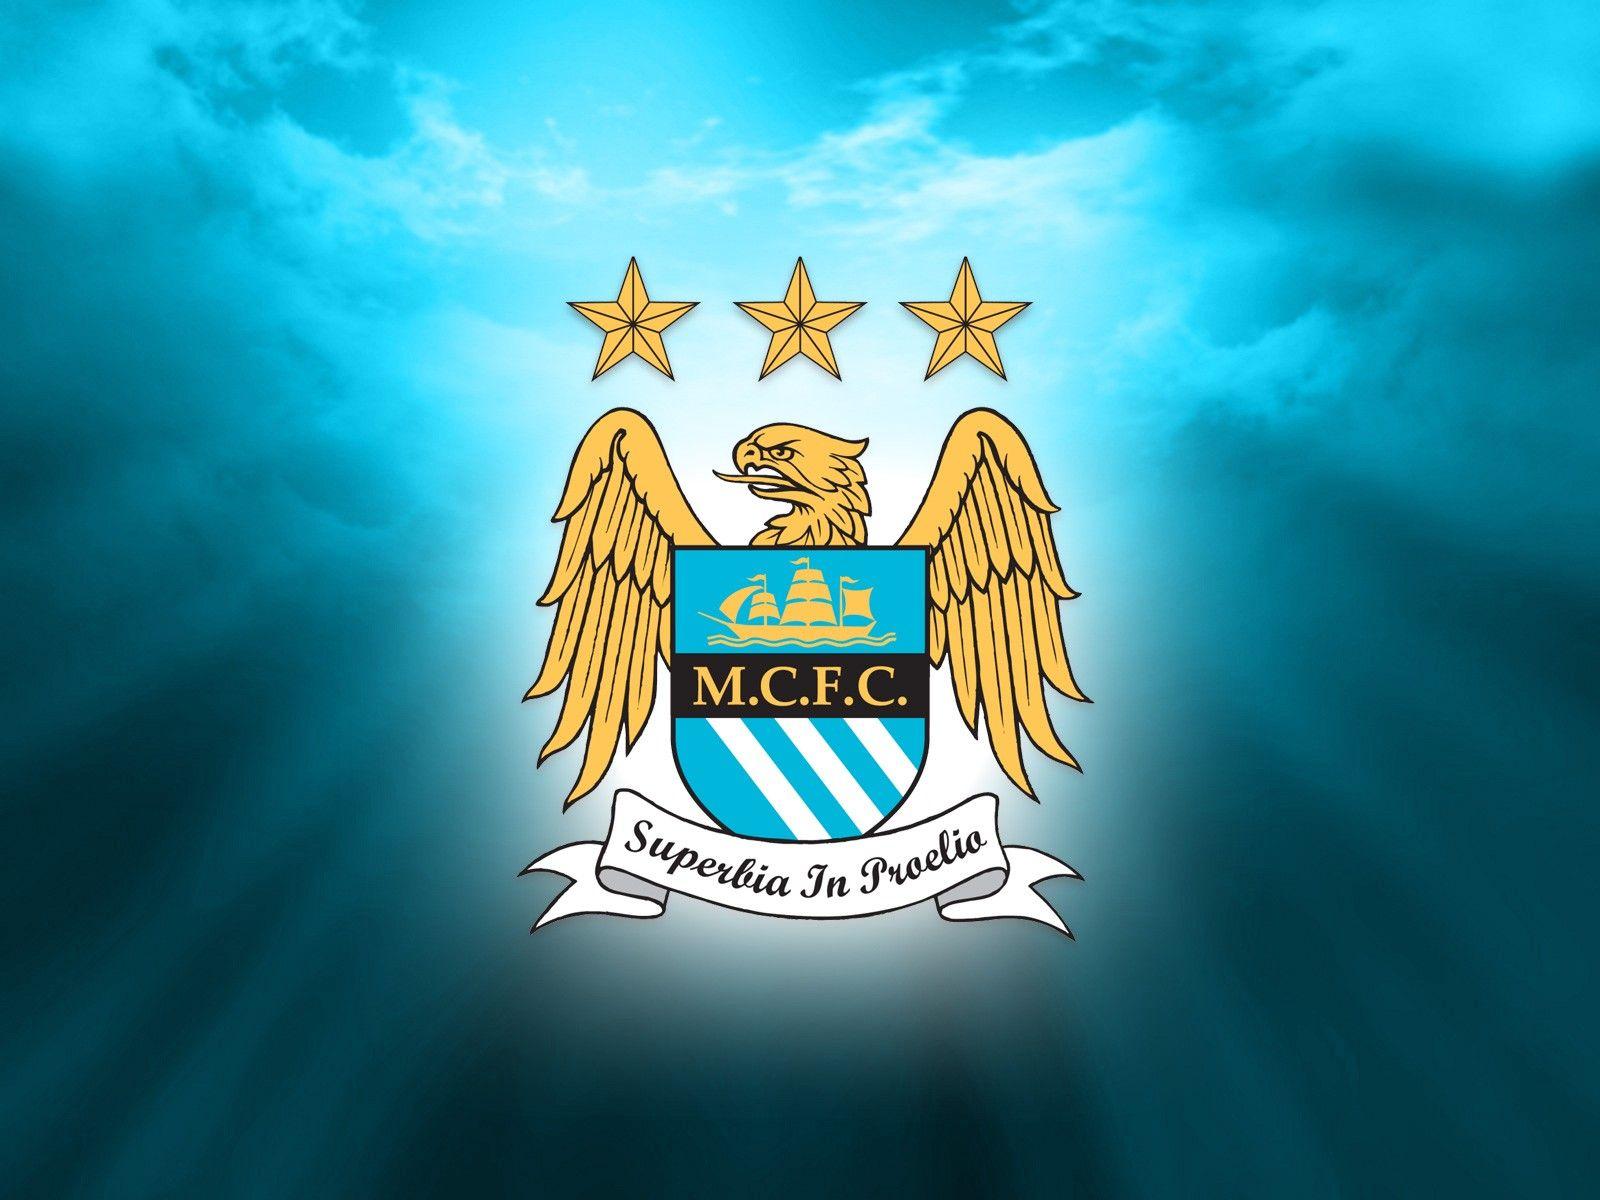 Man city logo wallpaper